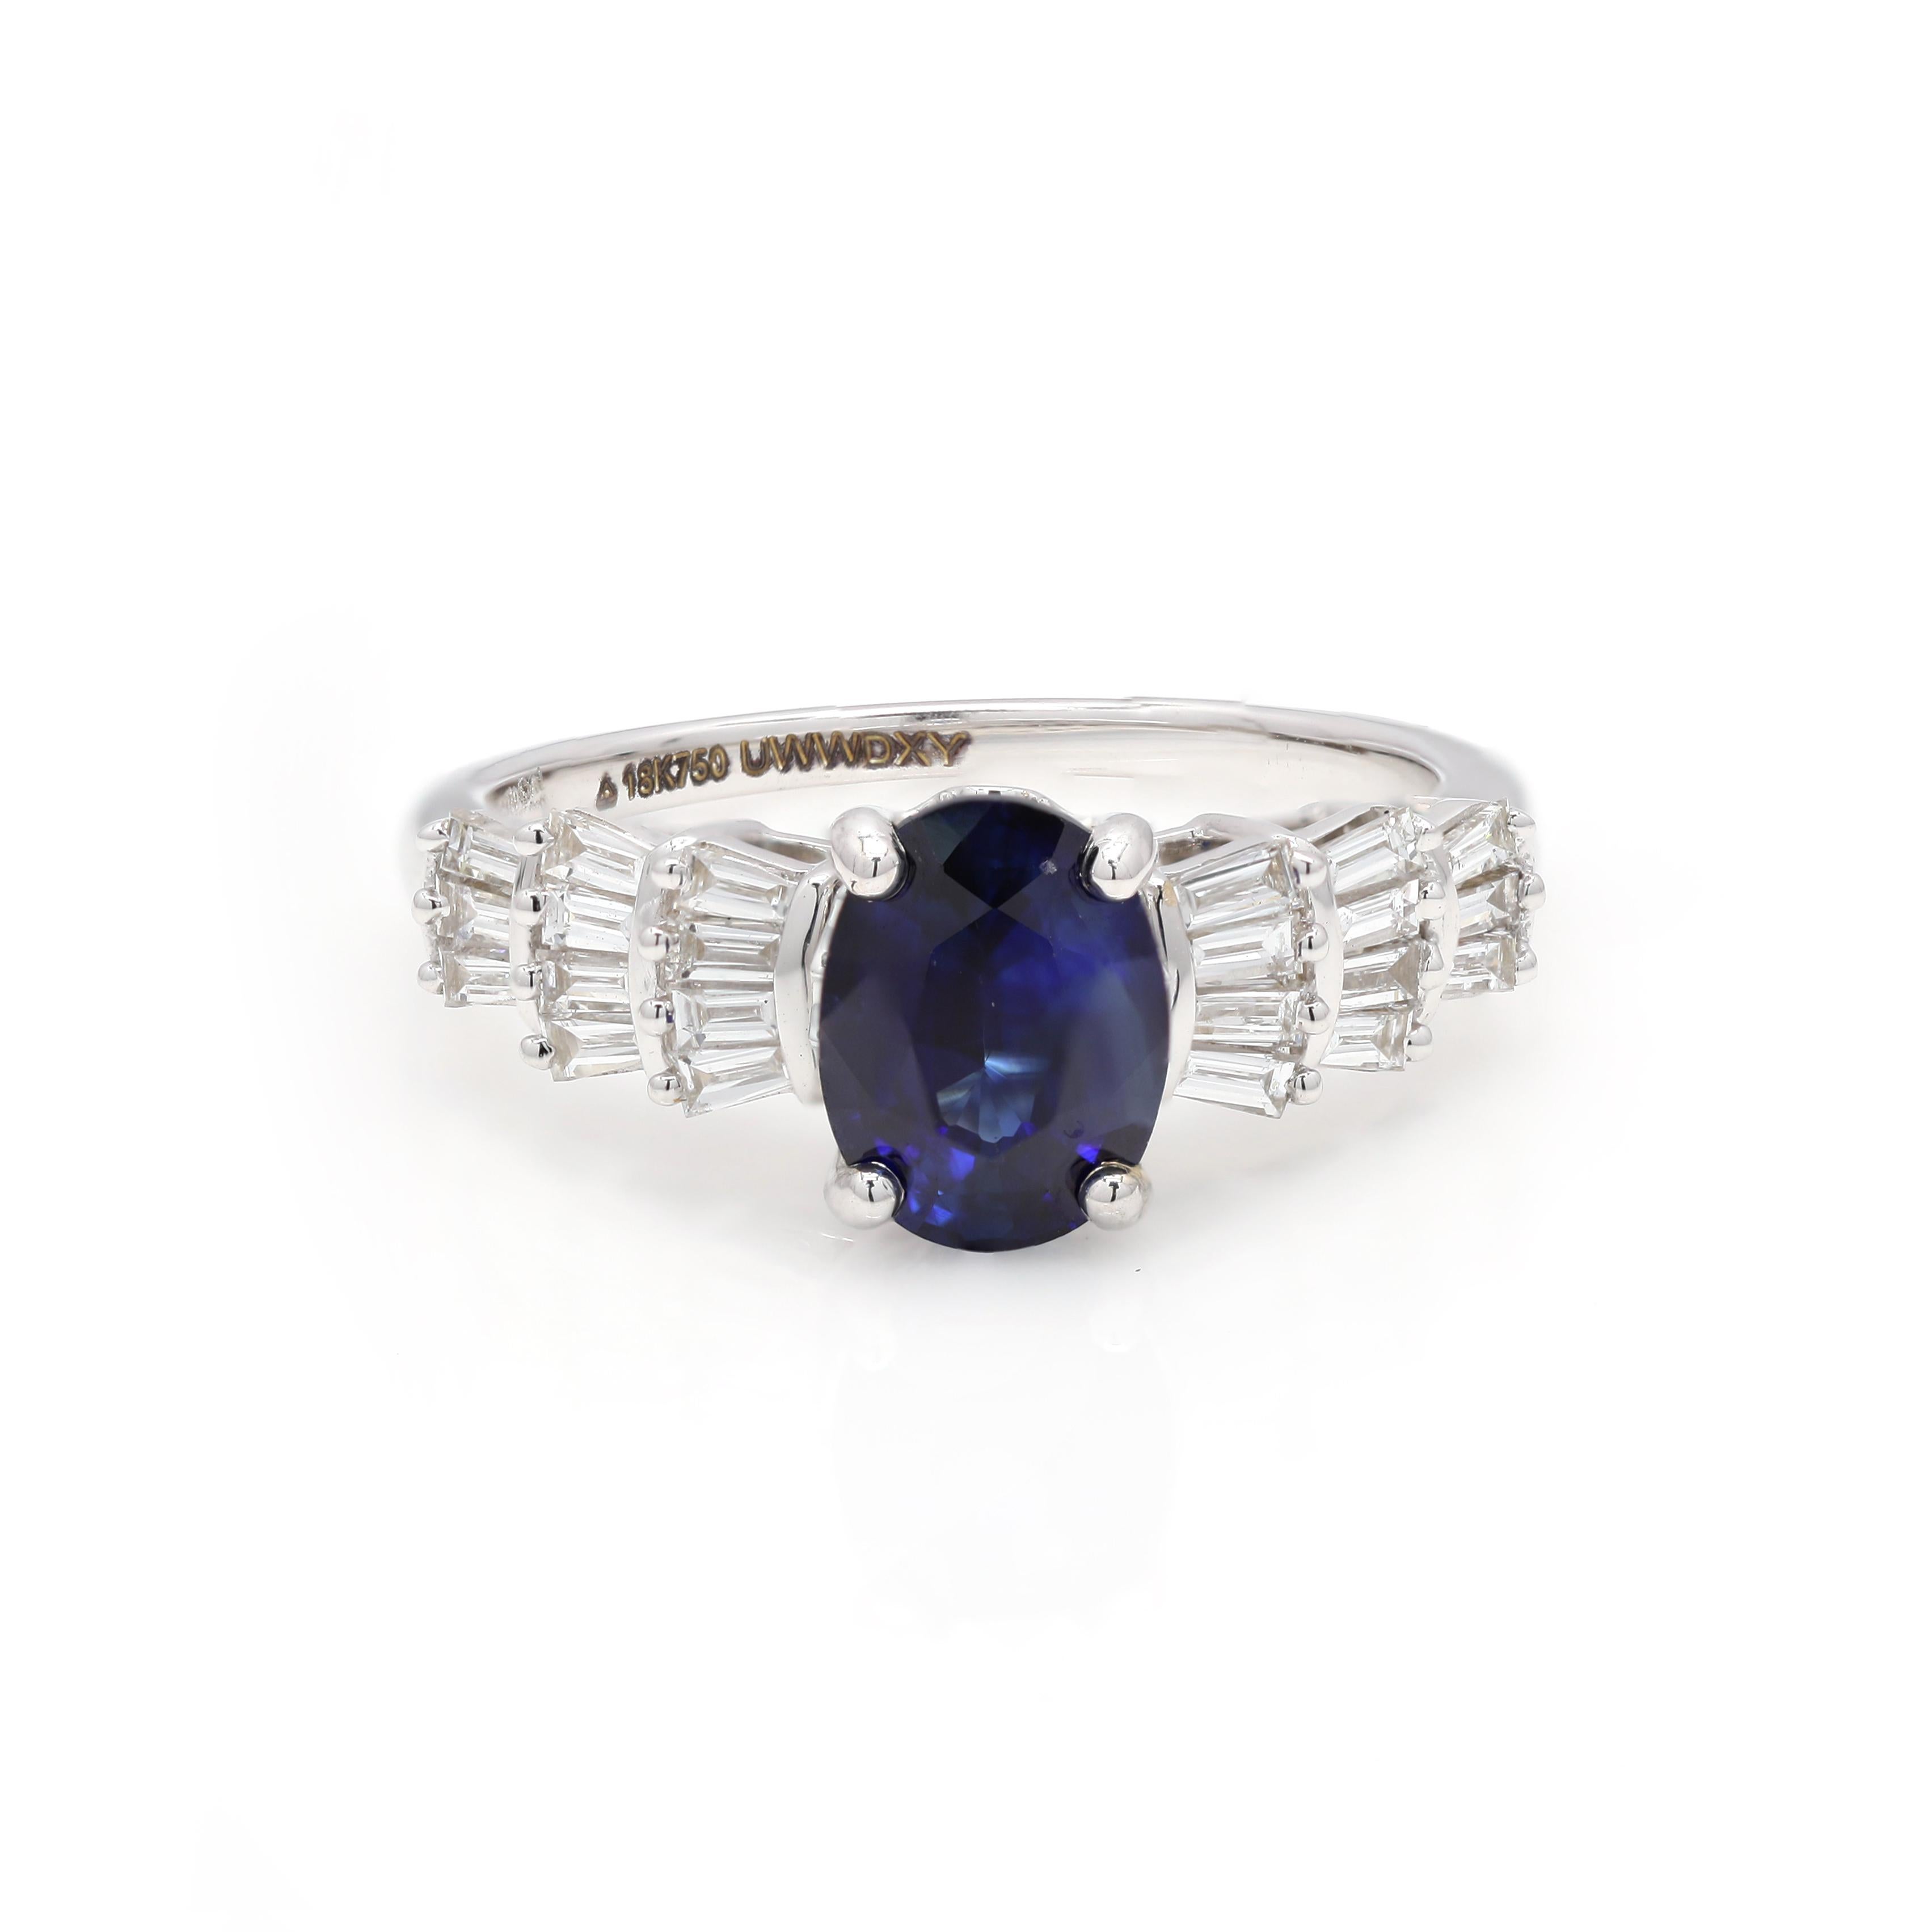 For Sale:  Elegant Blue Sapphire and Diamond Baguette Wedding Ring in 18k White Gold 3